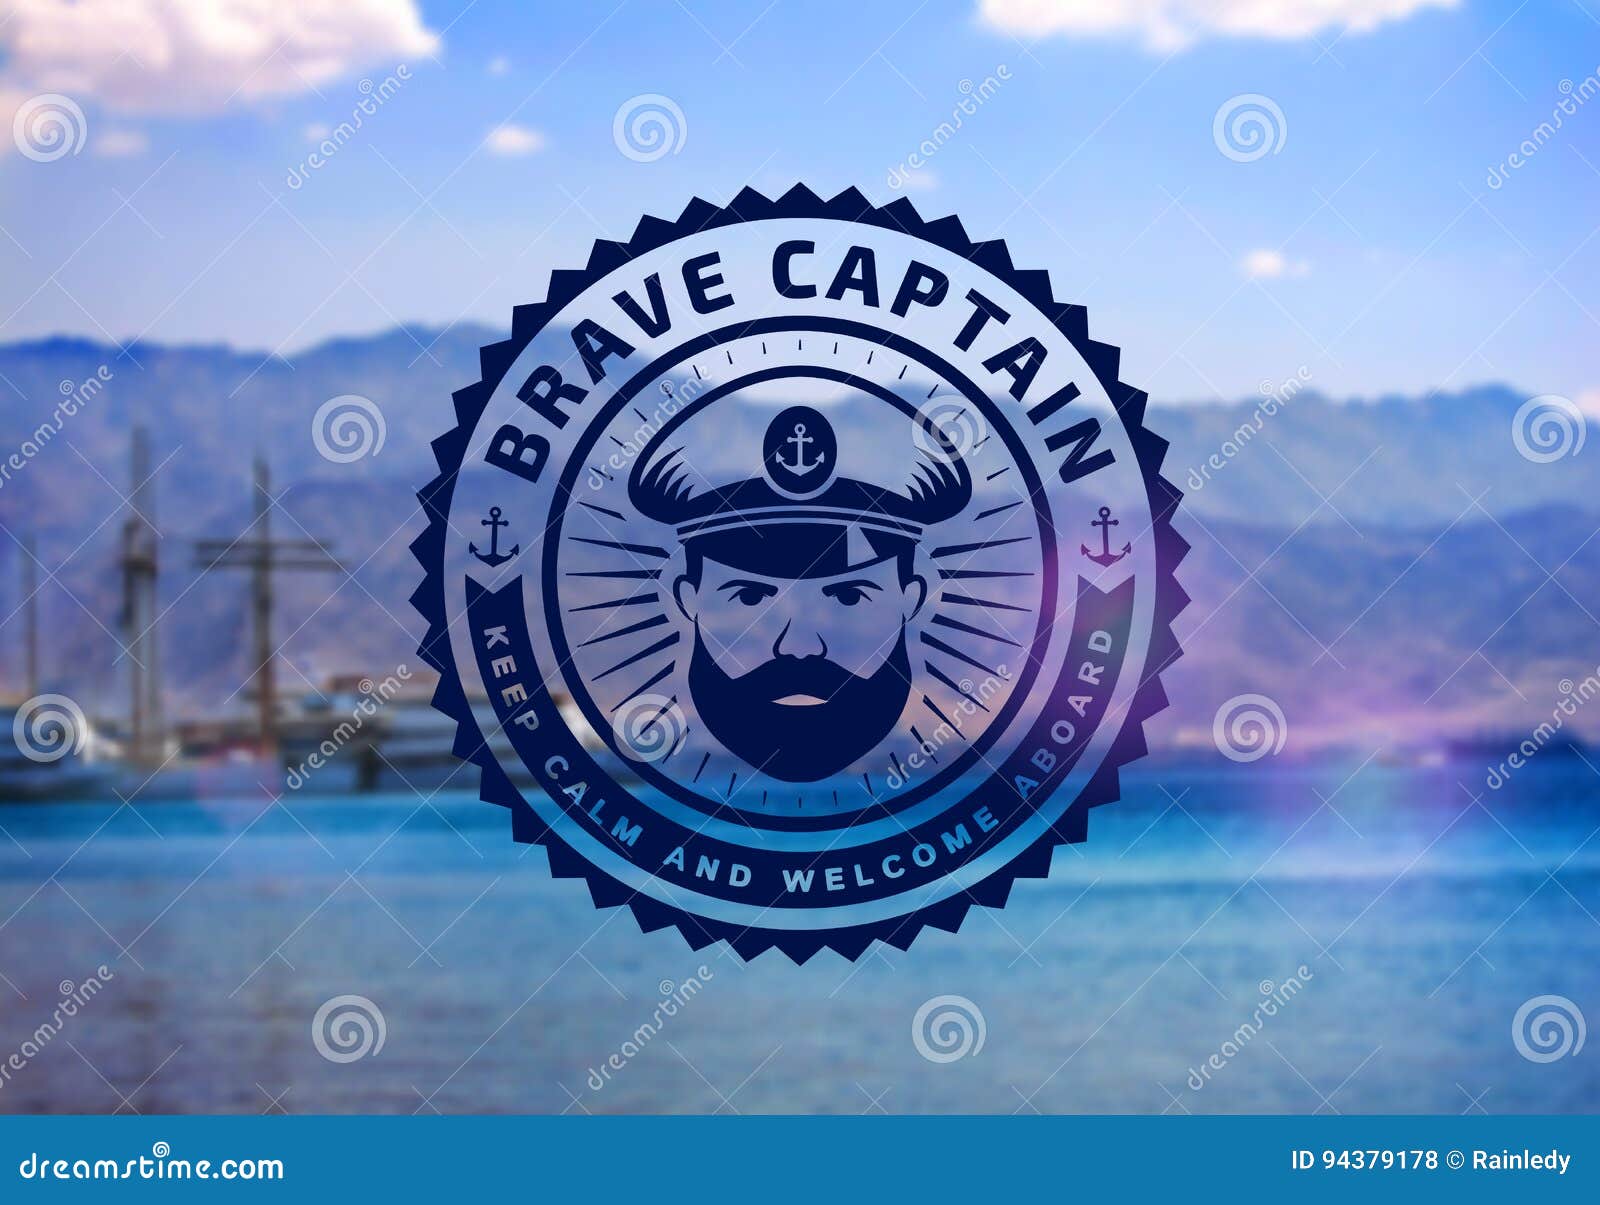 captain logo on blurred background.